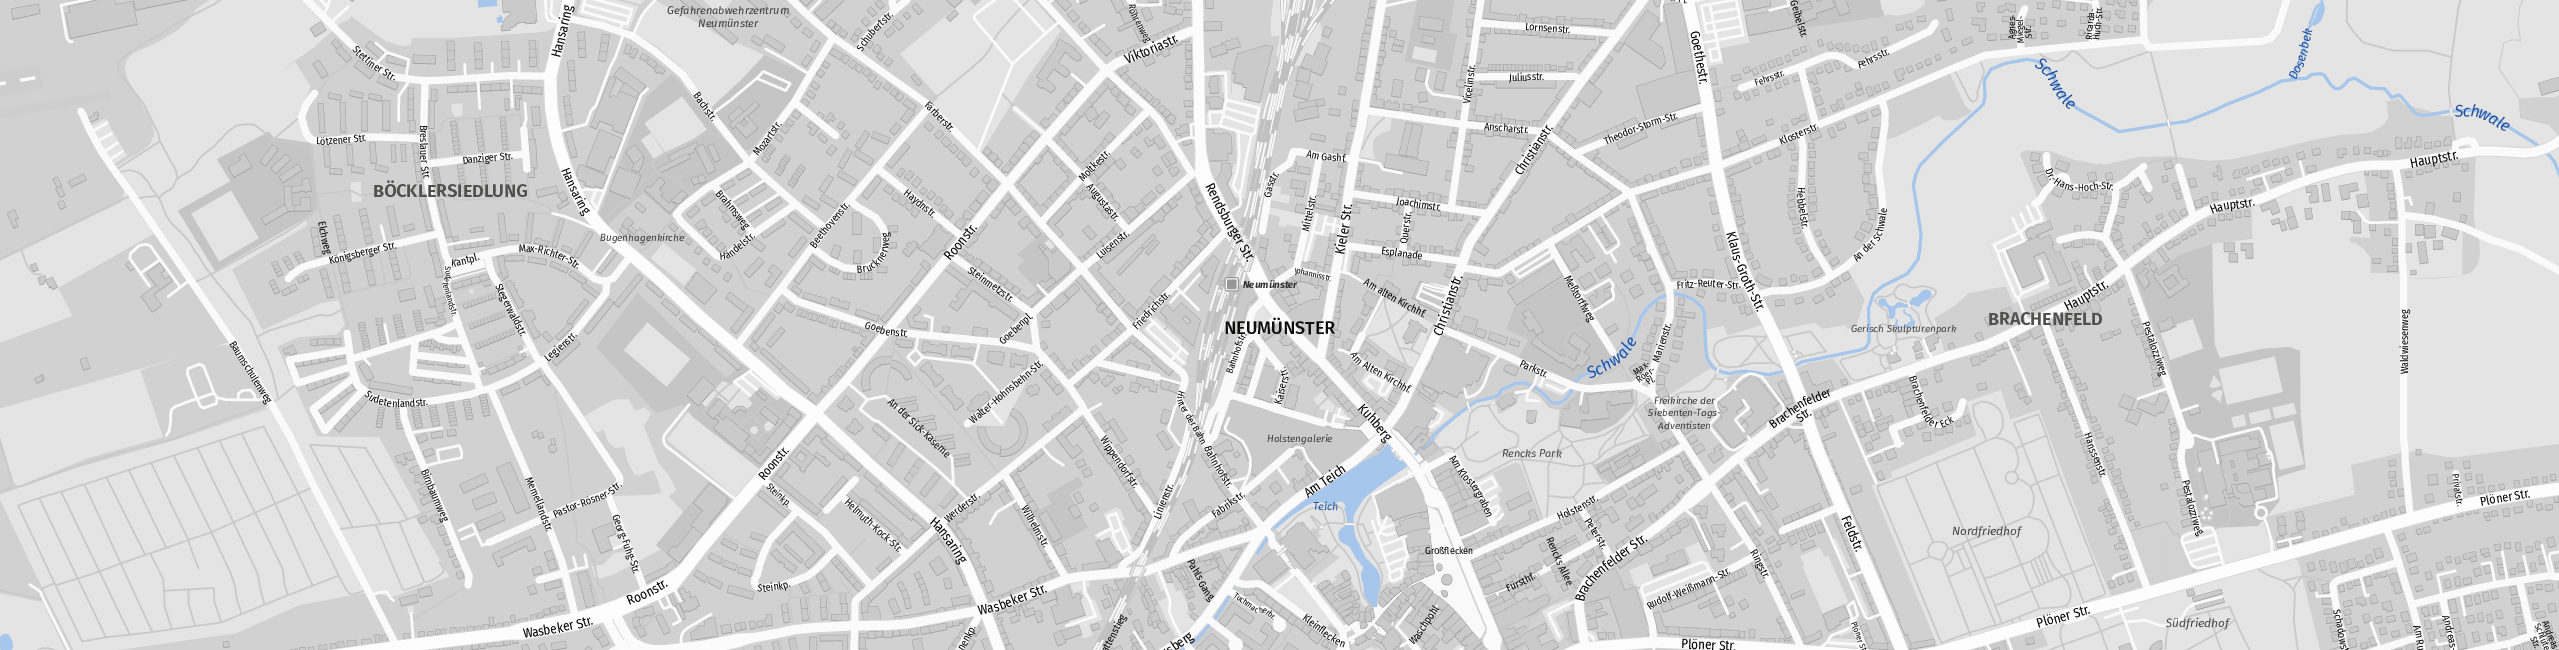 Stadtplan Neumünster zum Downloaden.